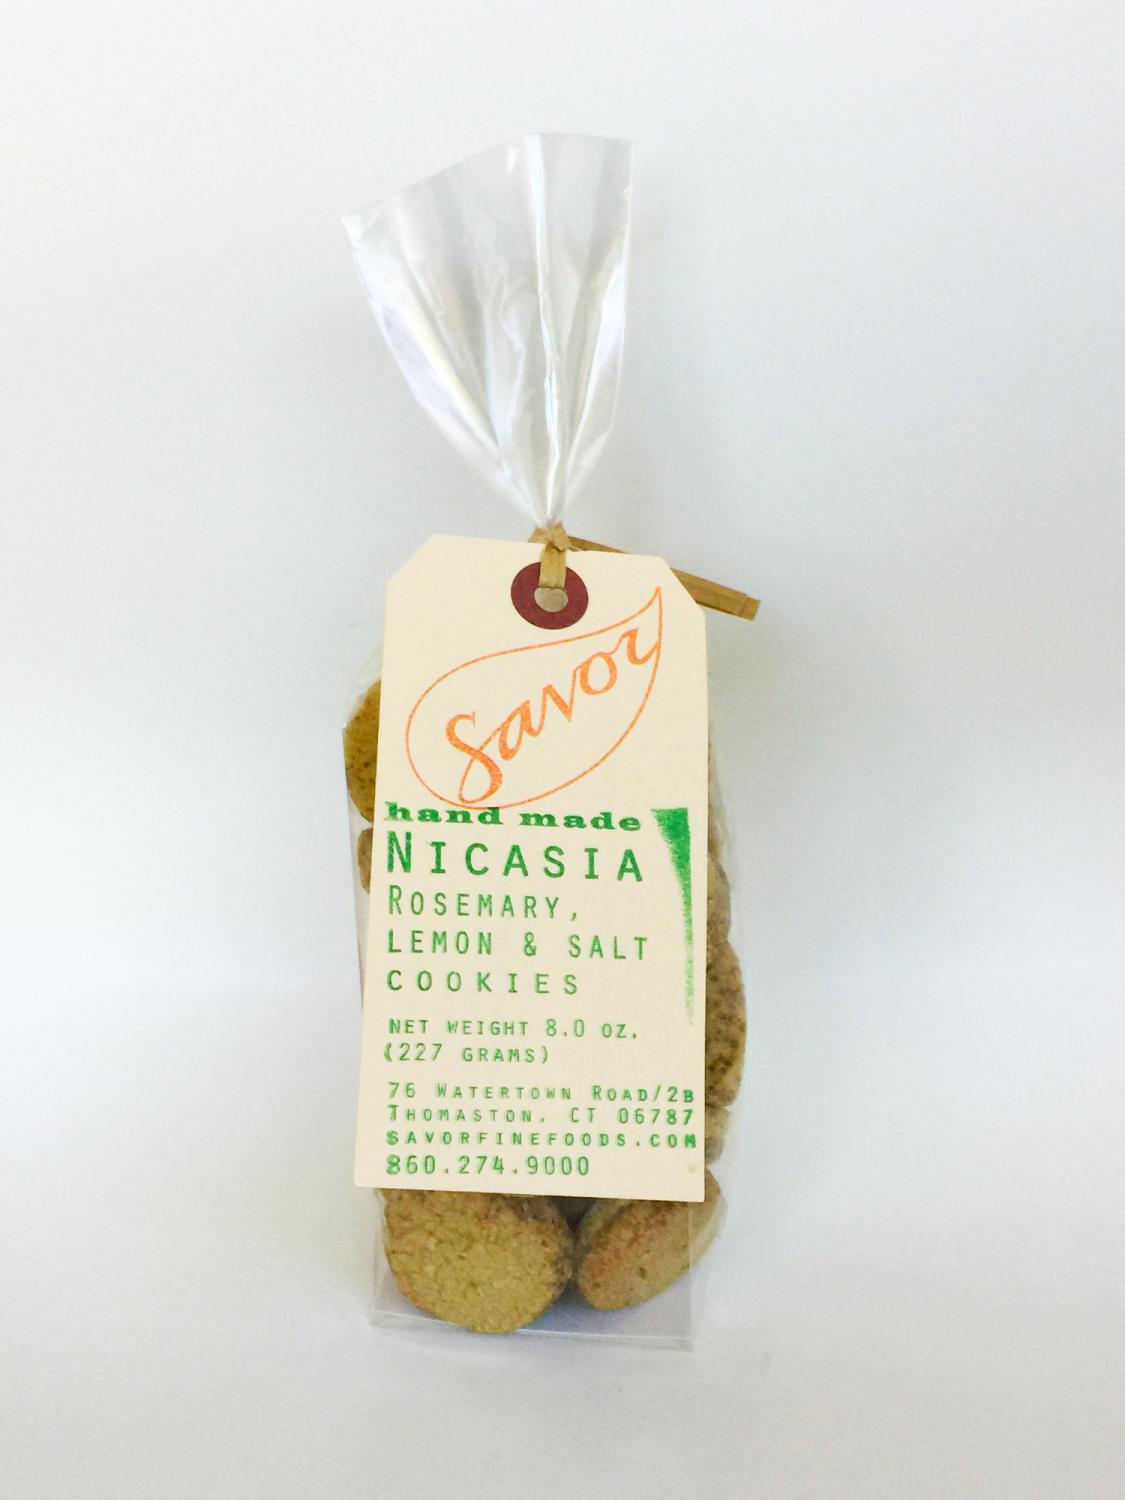 Nicasia Cookies - Lemon, Rosemary, Salt